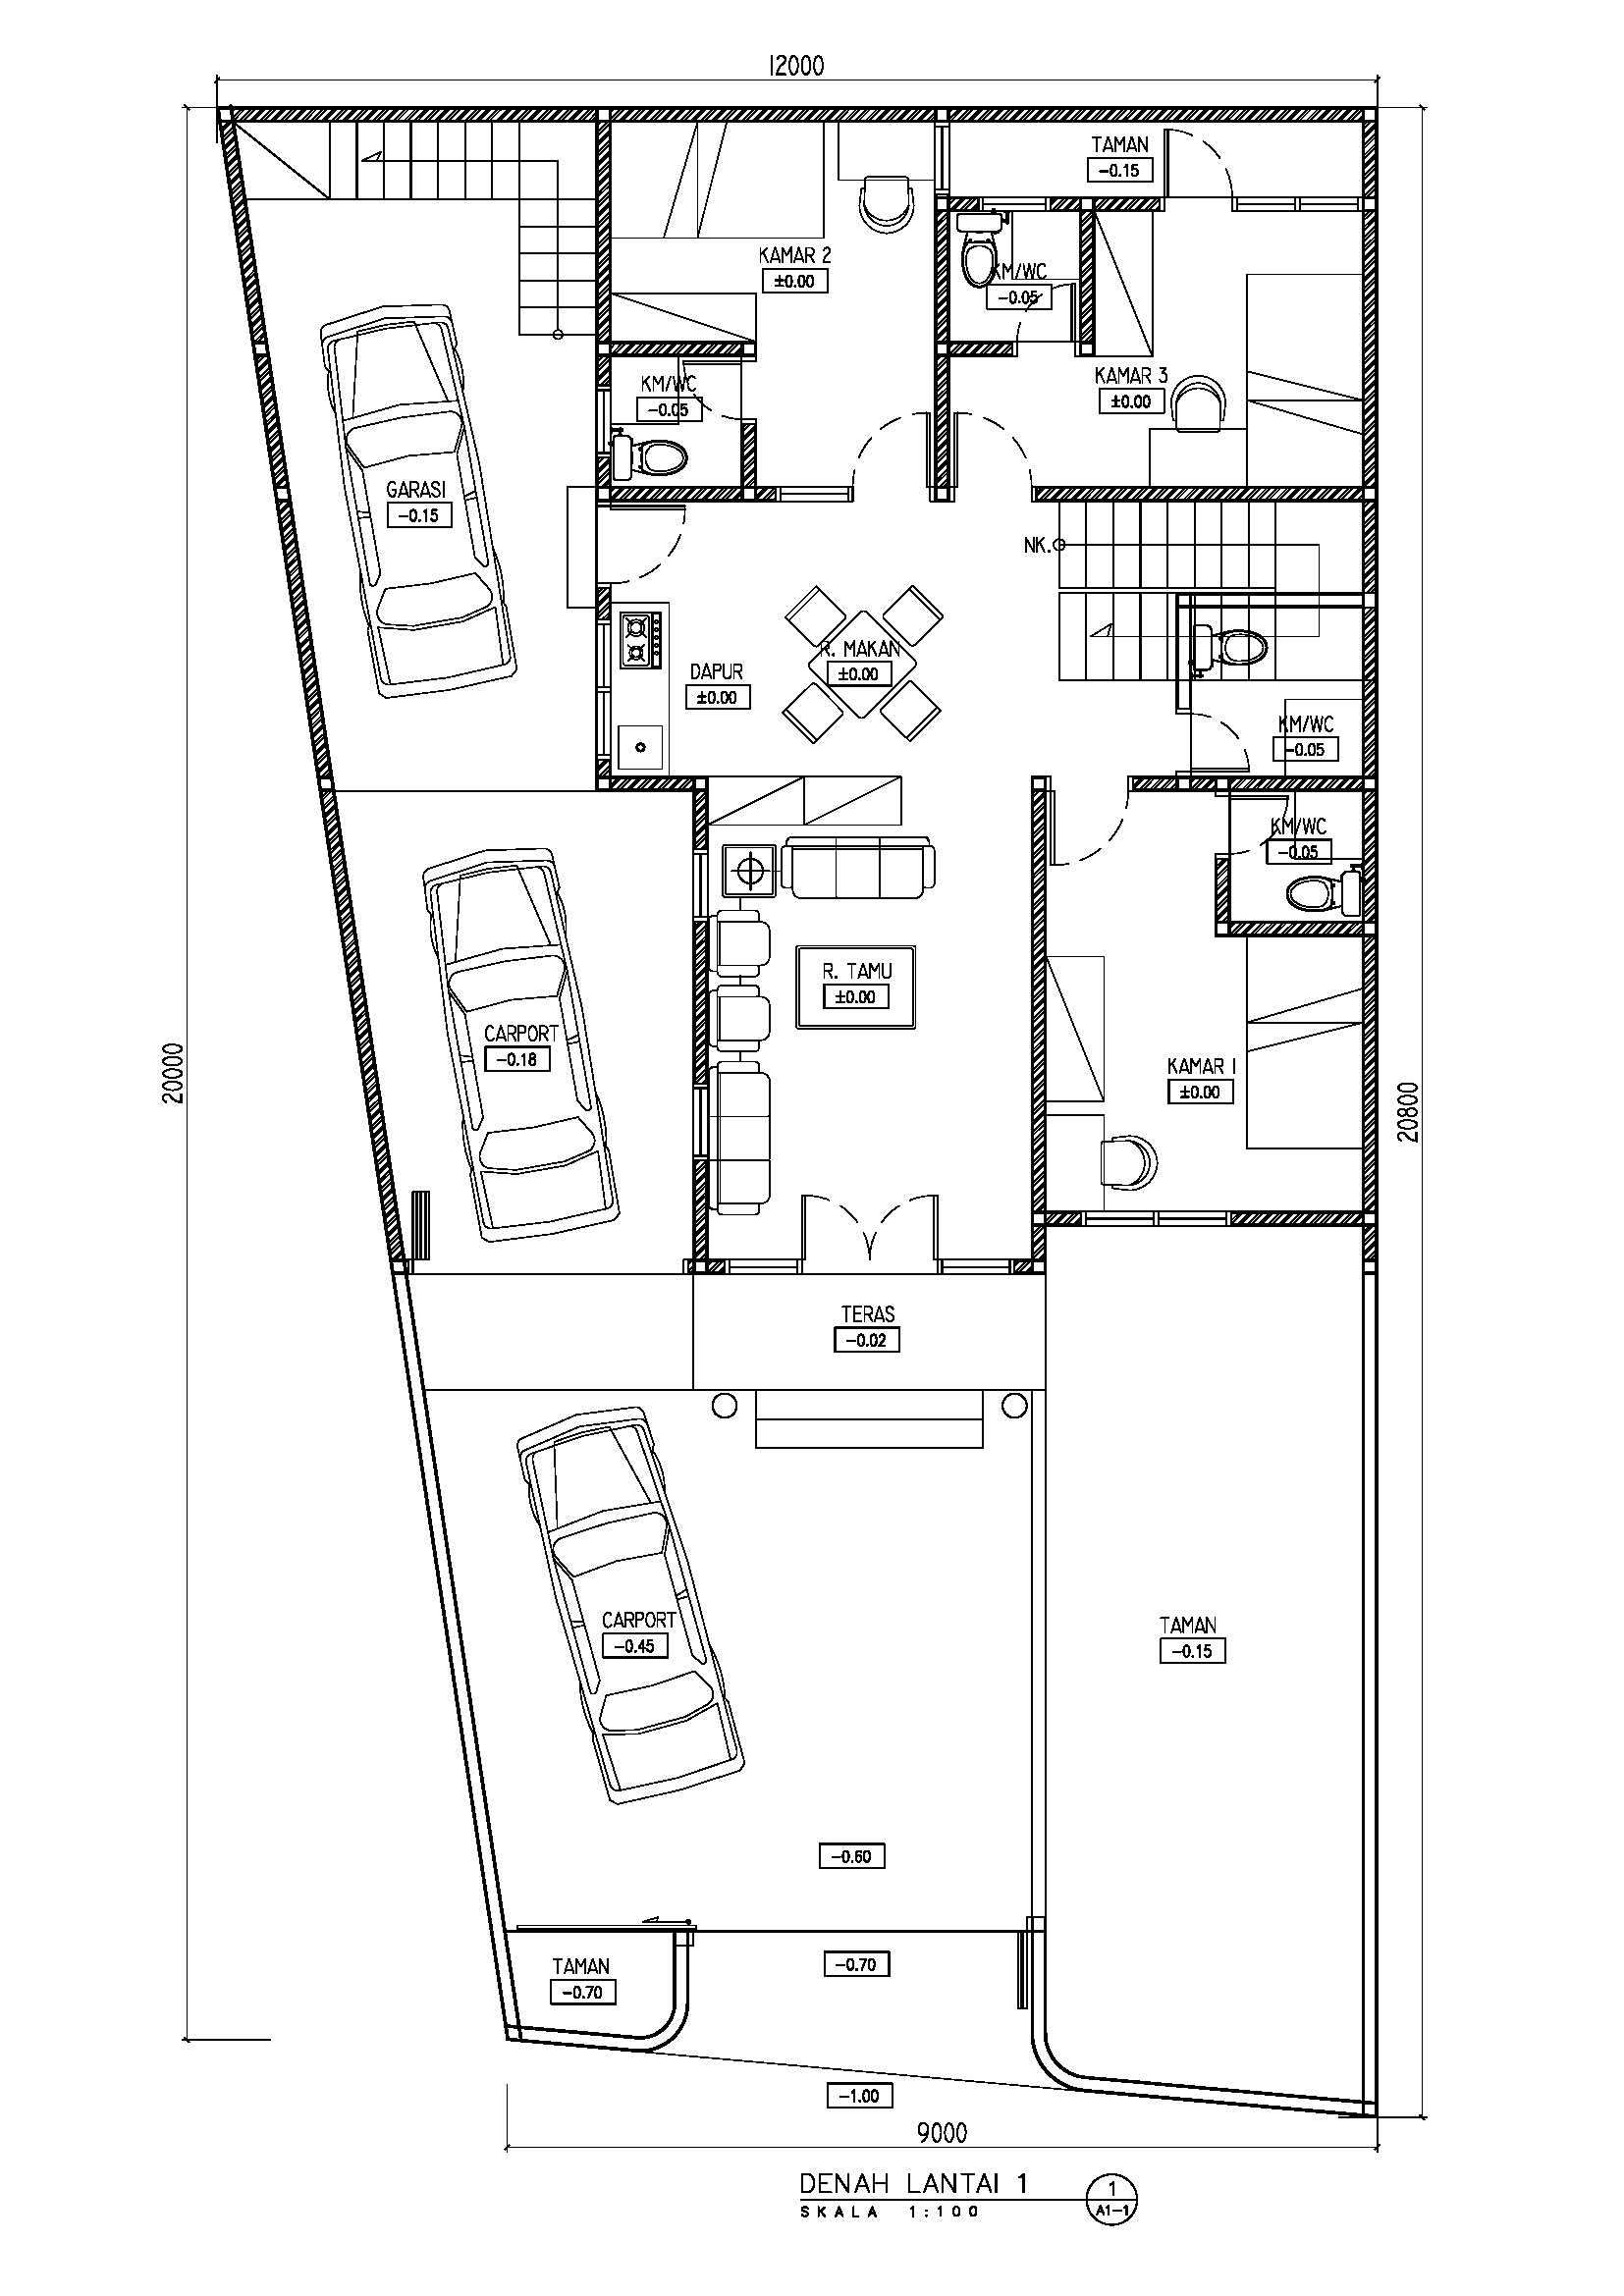 Desain rumah  kos minimalis 3 lantai  di jl baung lenteng 